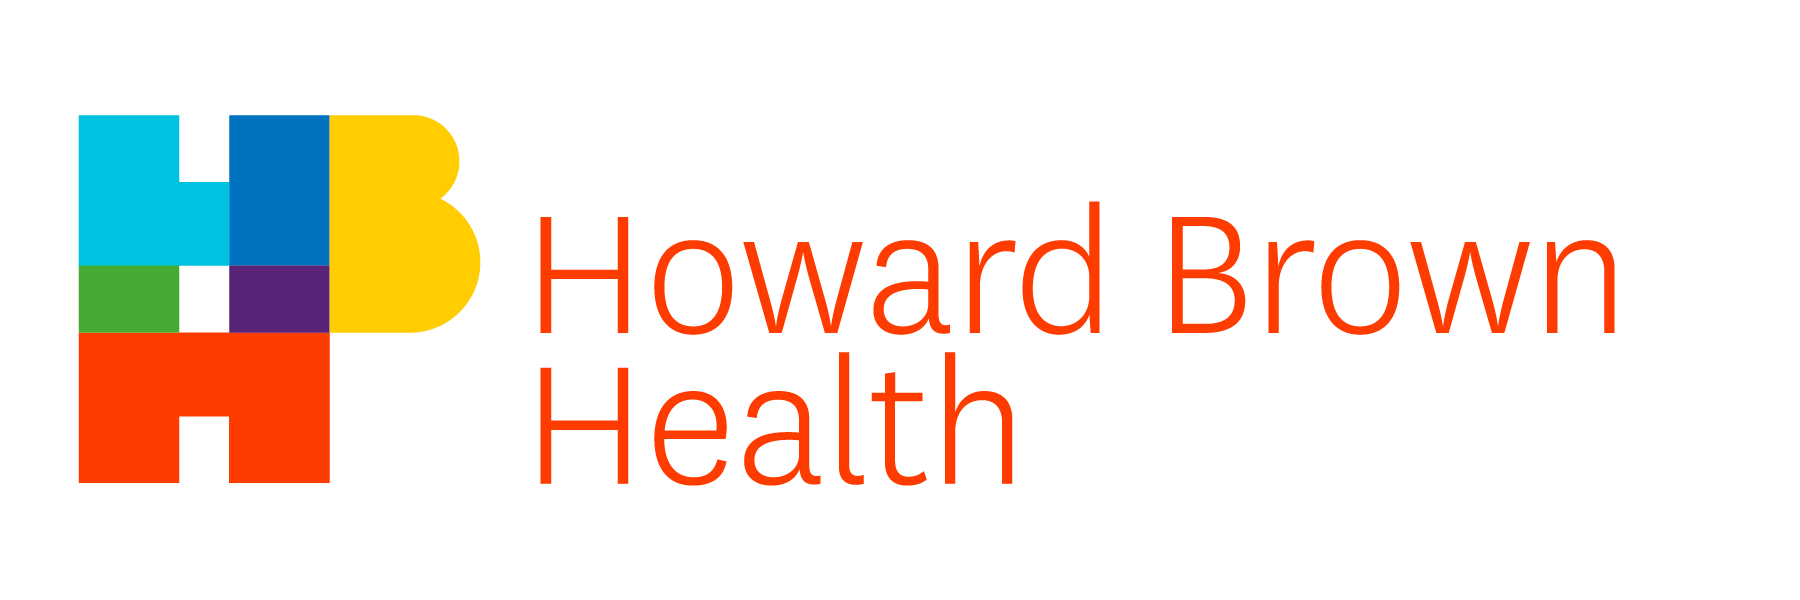 howard brown health logo